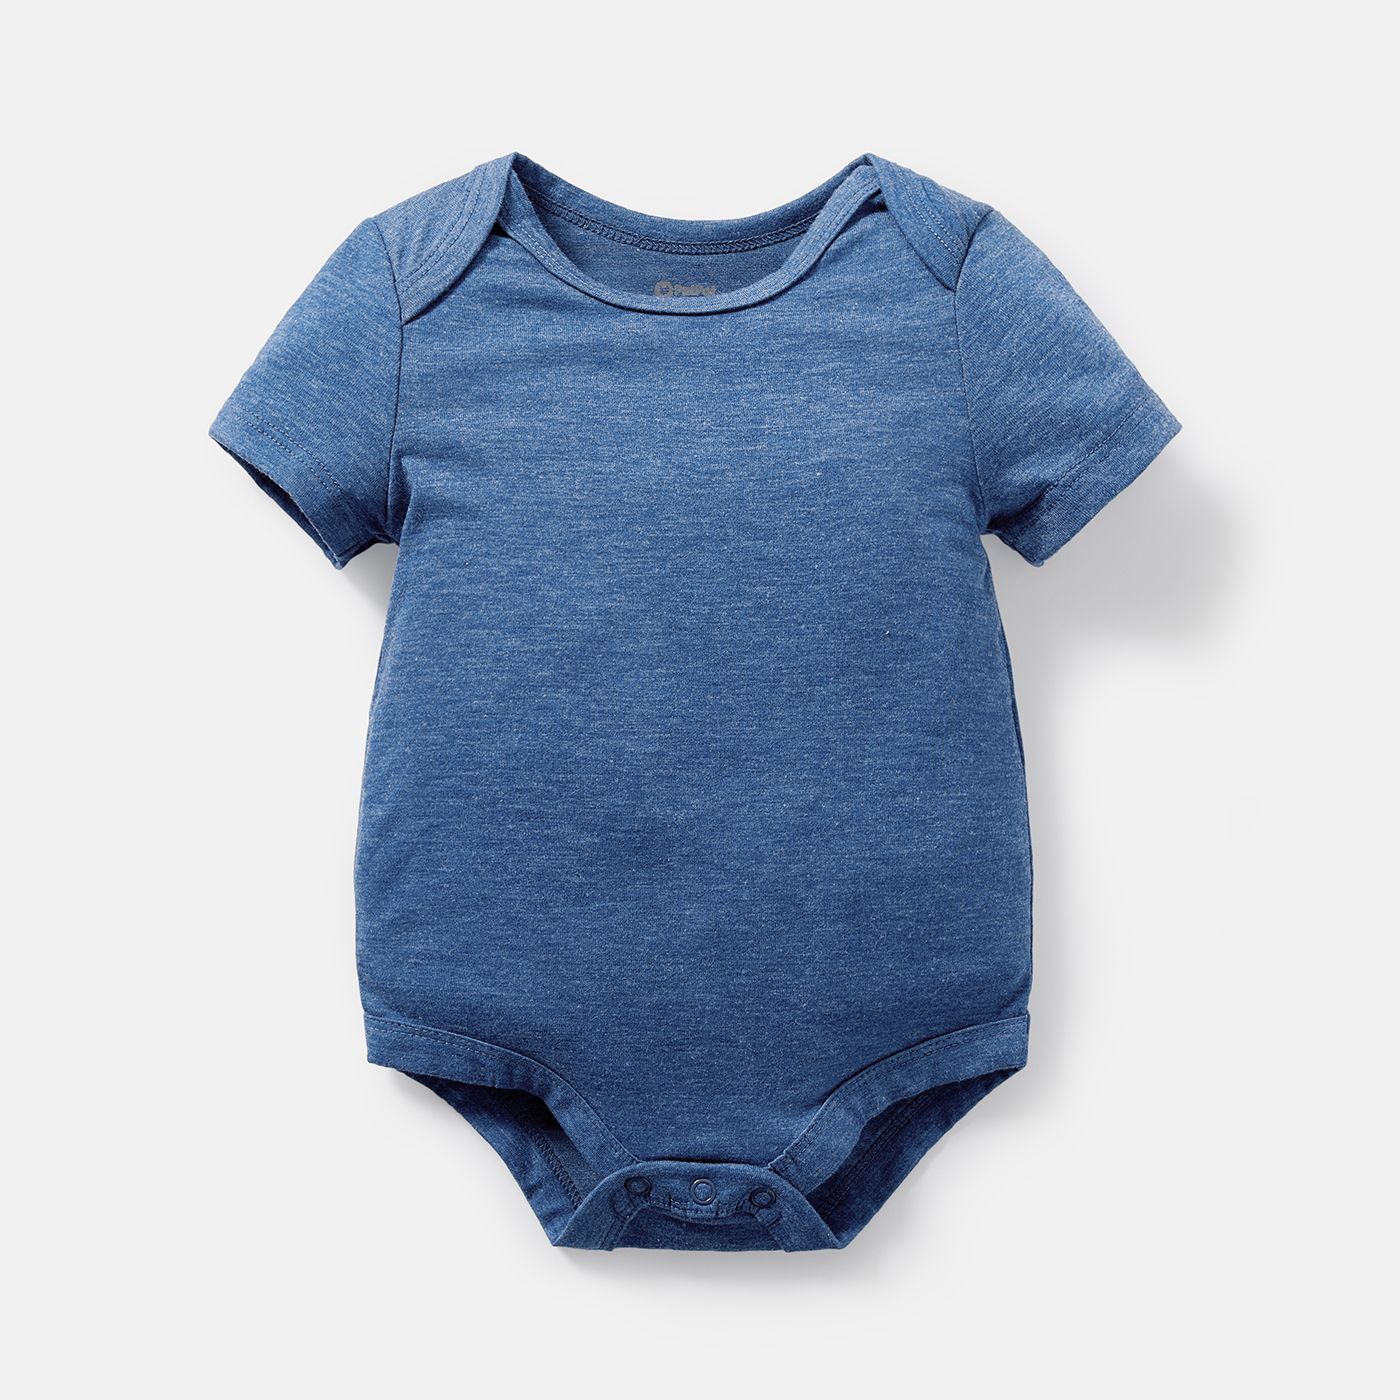 Naia Baby Boy Dinosaur/Letter Print/Blue Short-sleeve Rompers